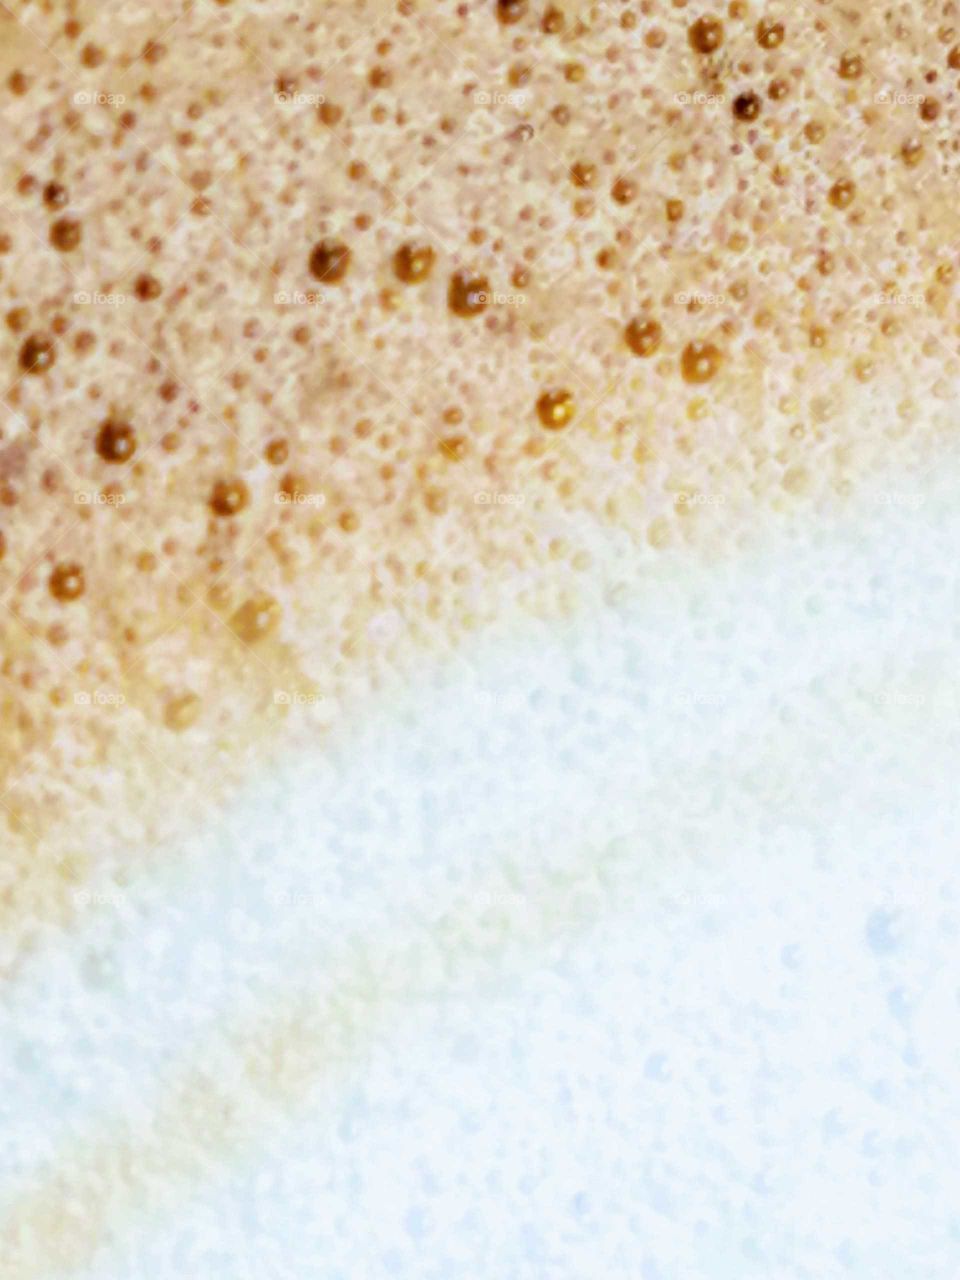 Macro shot of coffee foam